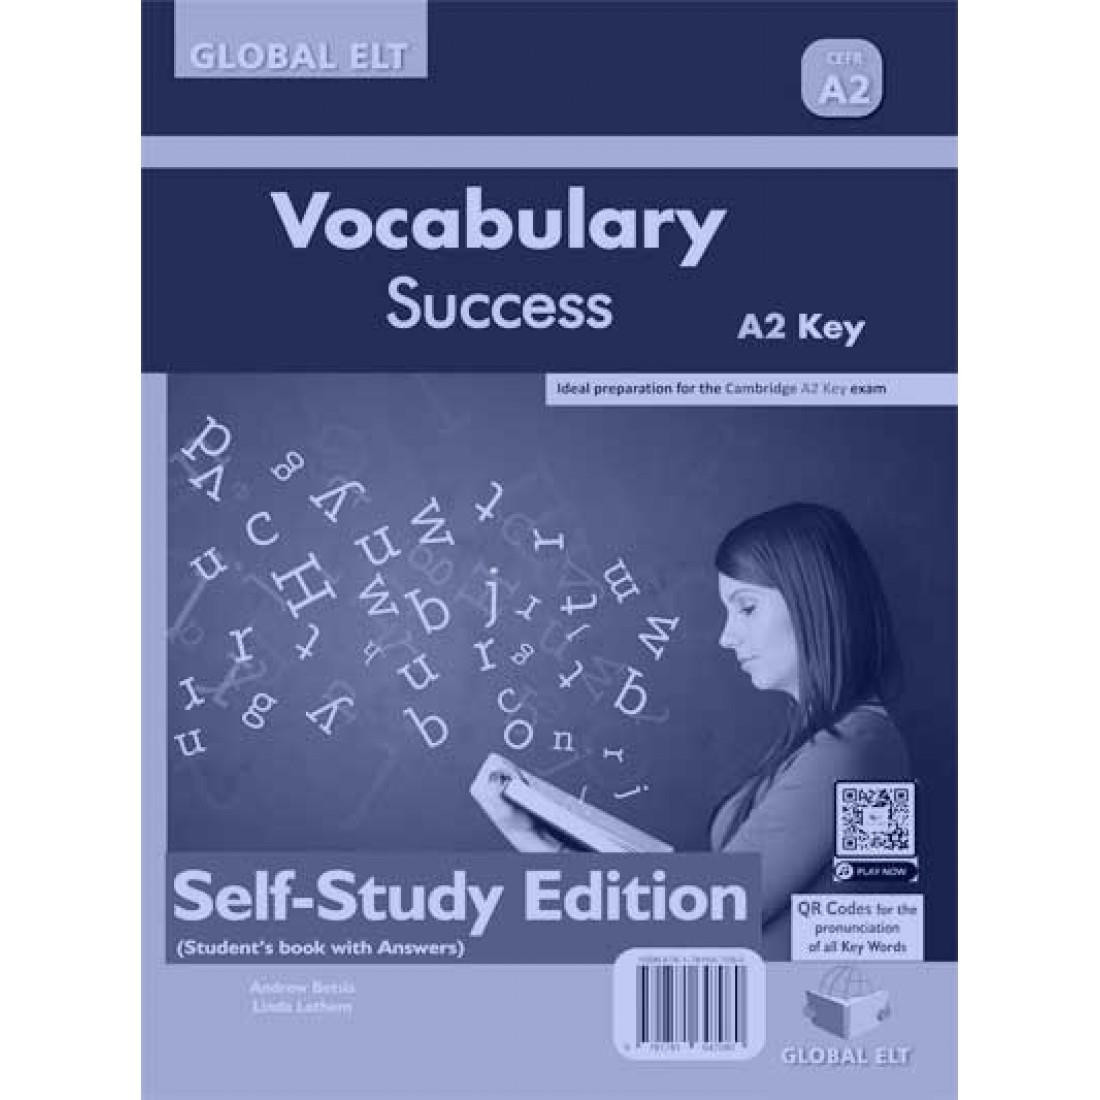 VOCABULARY SUCCESS A2 KEY SELF STUDY EDITION